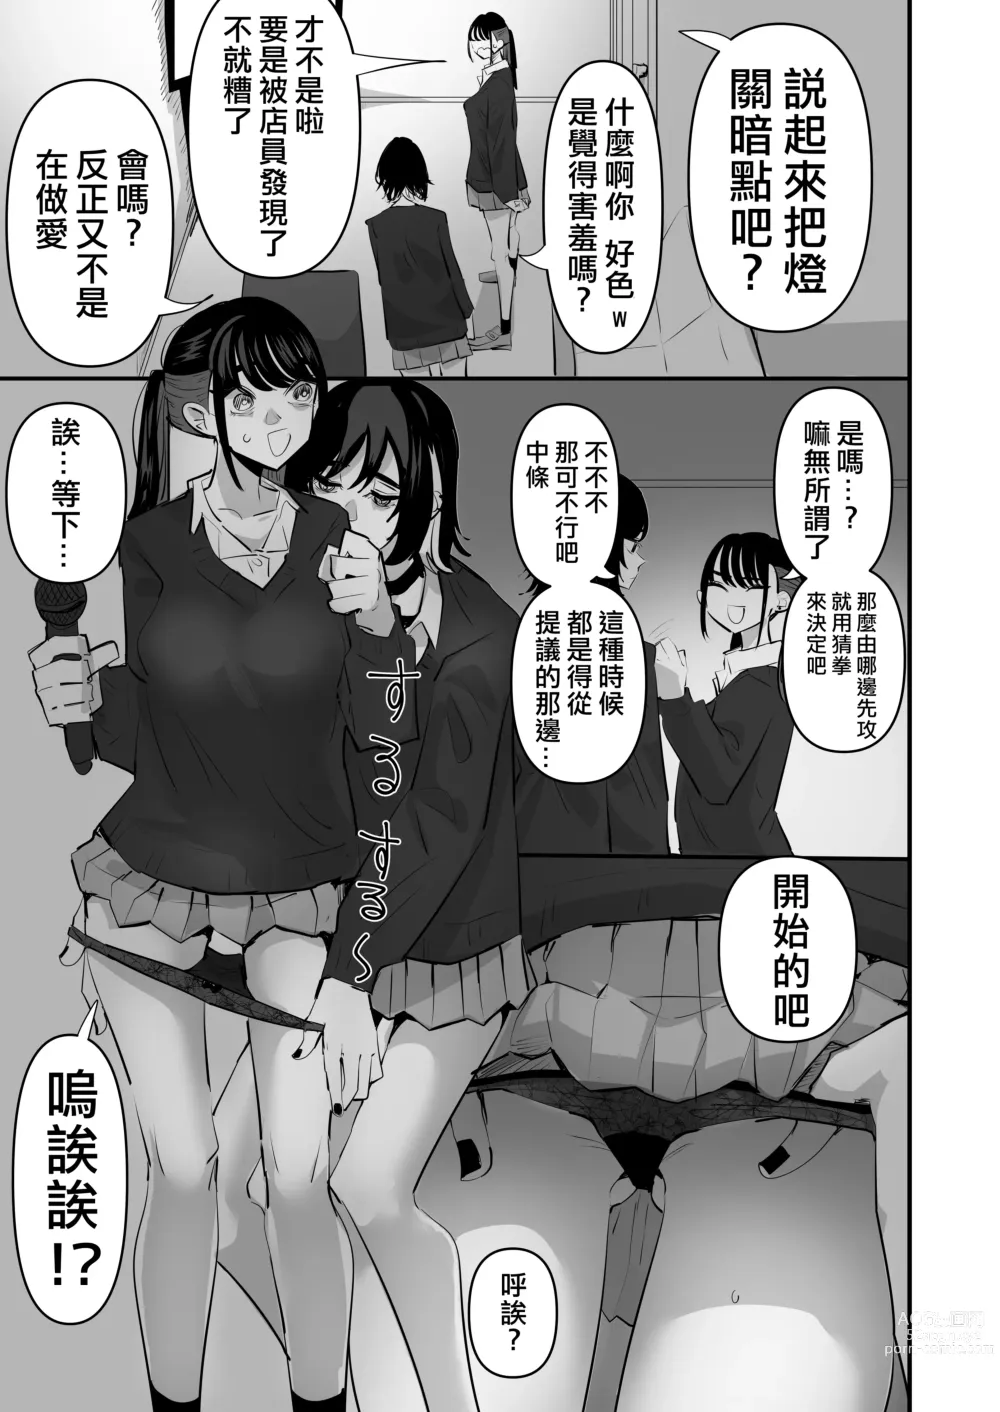 Page 7 of doujinshi 指交卡拉OK